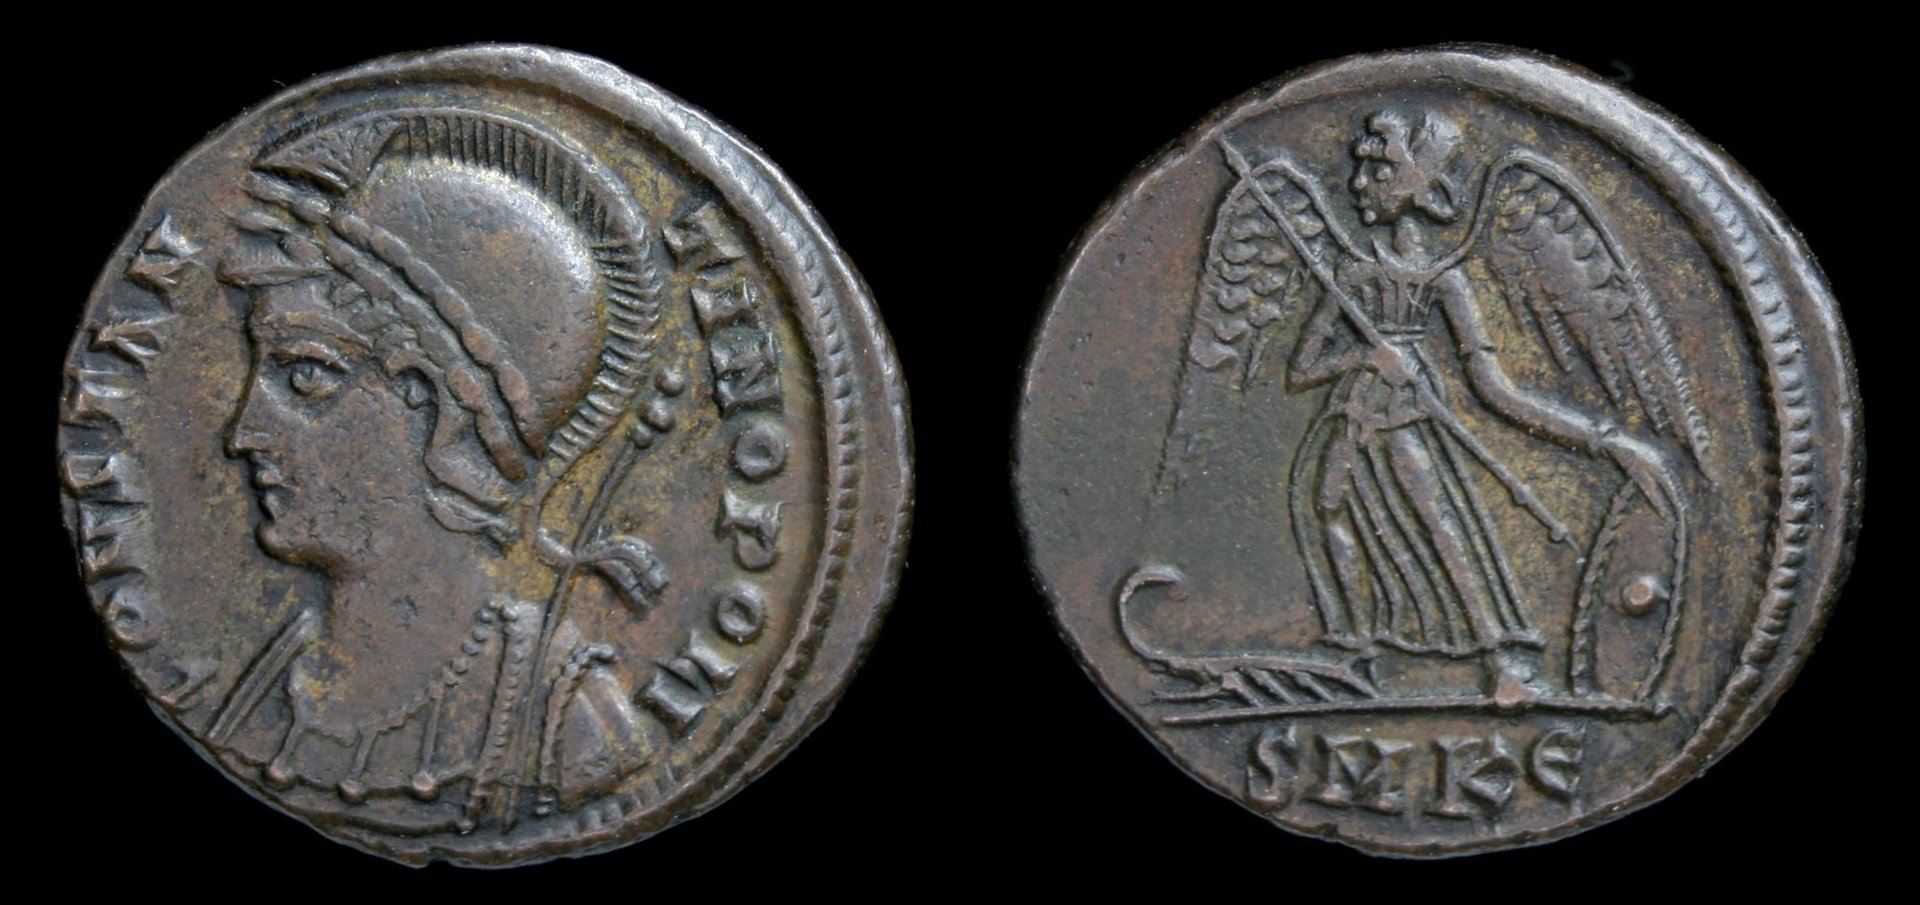 Rom – Konstantin der Große, Stadtprägung, Konstantinopel, Kyzikos.jpg